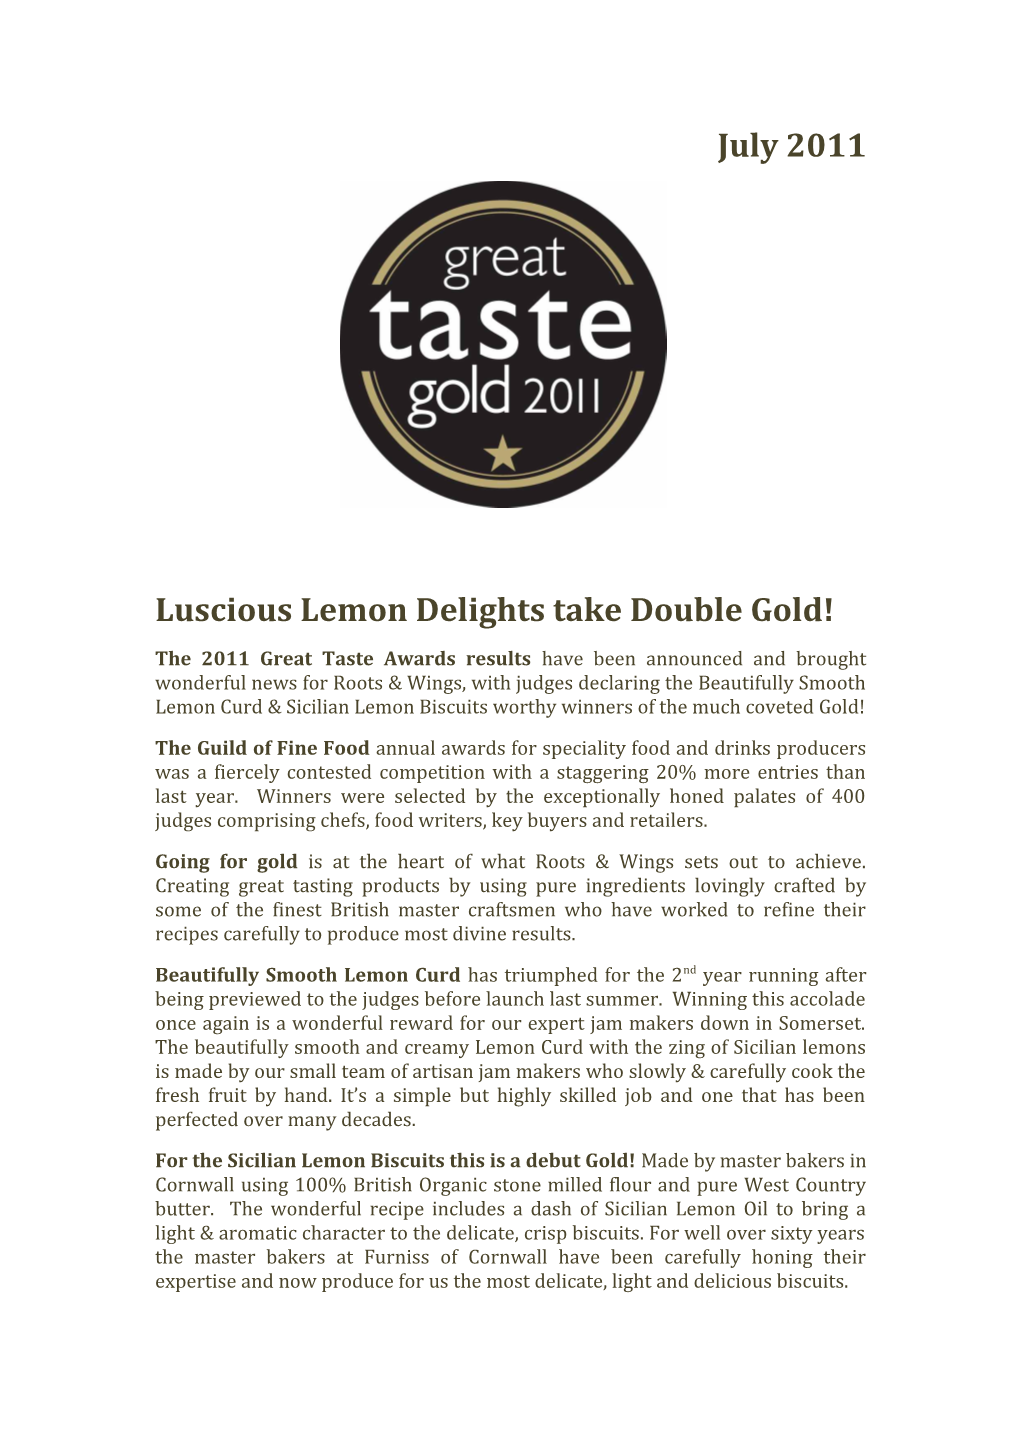 Luscious Lemon Delights Take Double Gold!